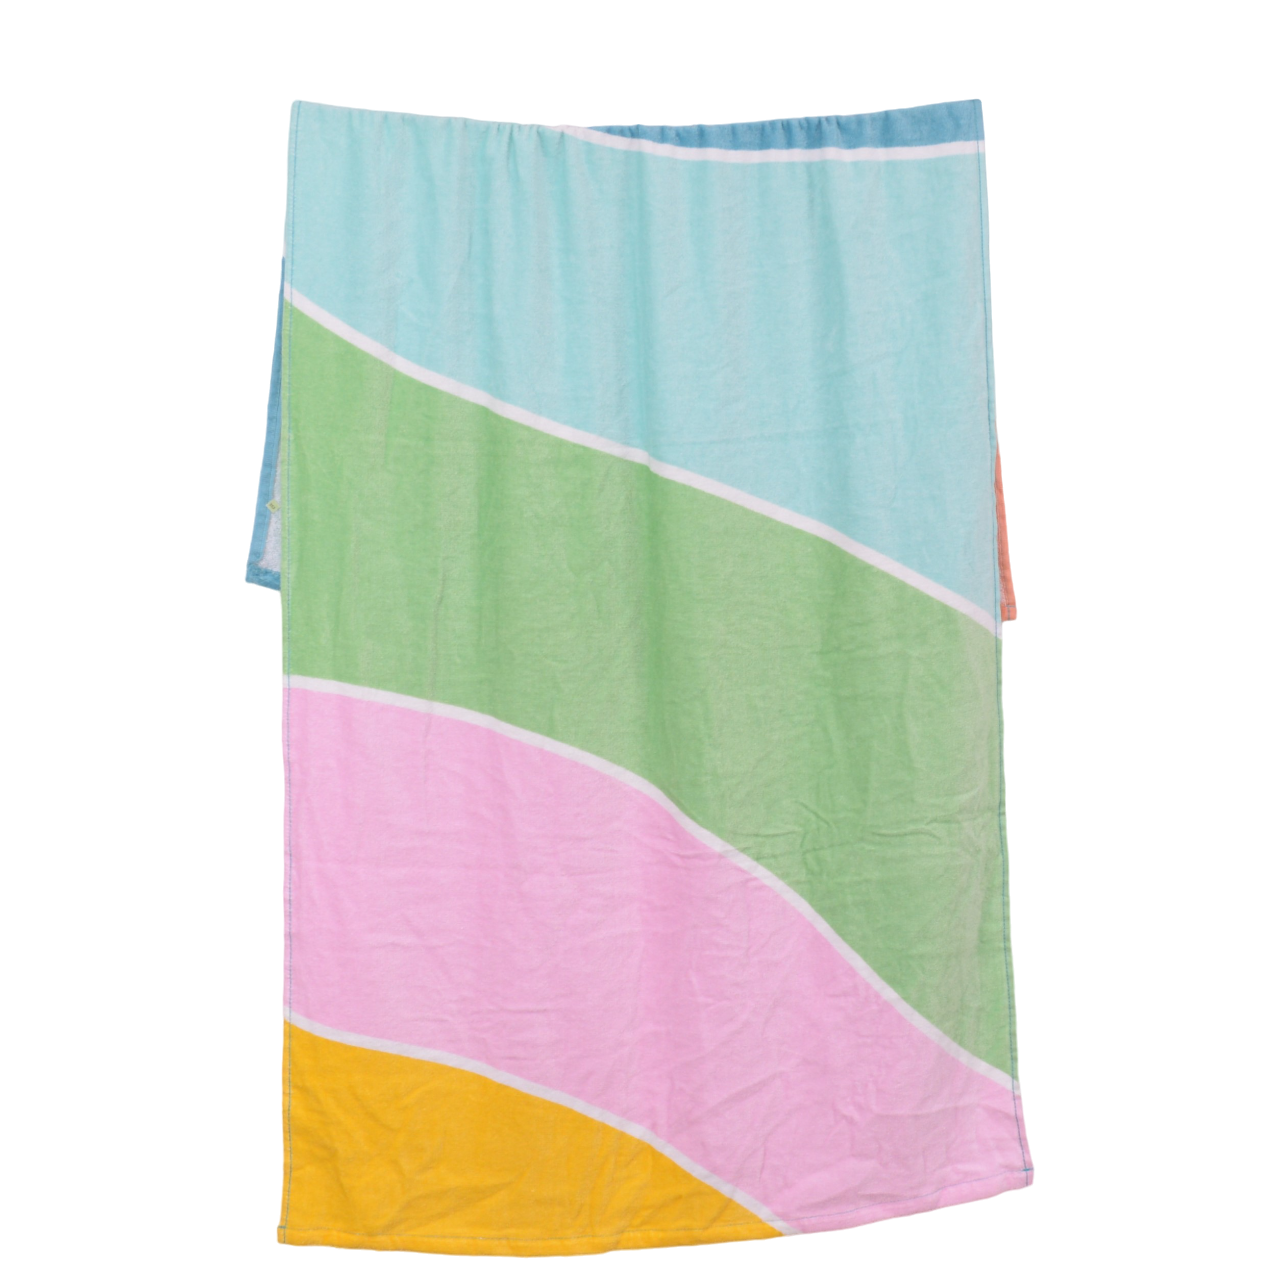 RAINBOW - Velvet Printed Kids Towel Exports Leftover 100% Cotton - KBT020